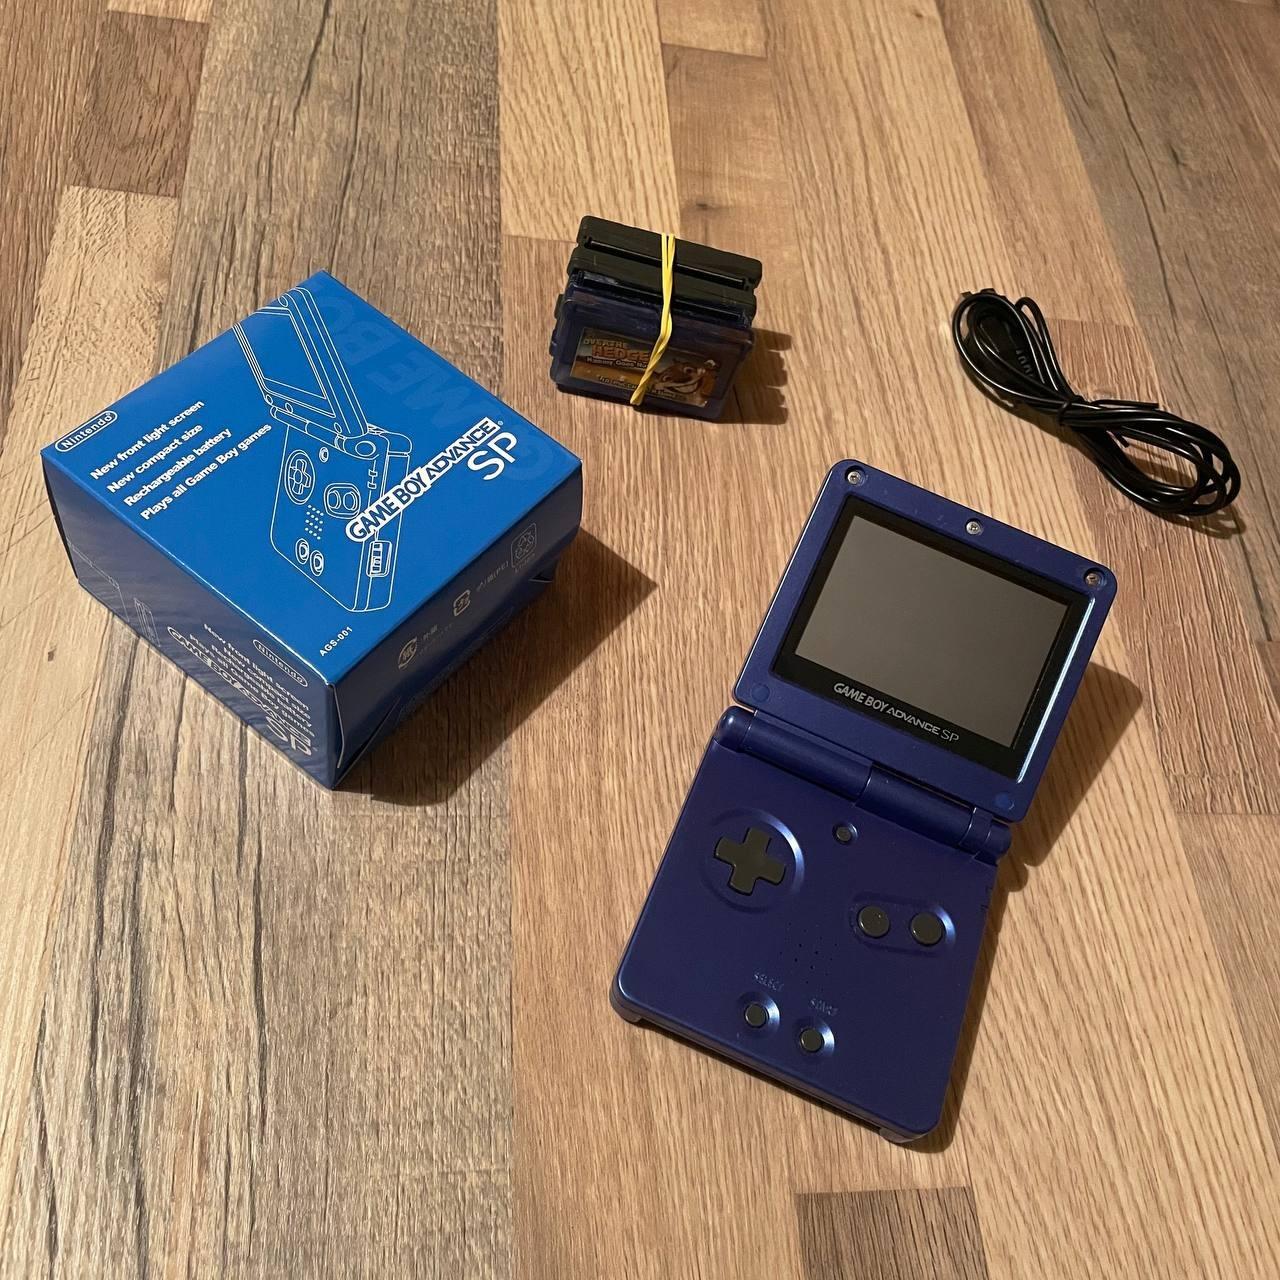 Game Boy Advance Sp Ags 001 Blue купить в Москве цена 6 500 руб